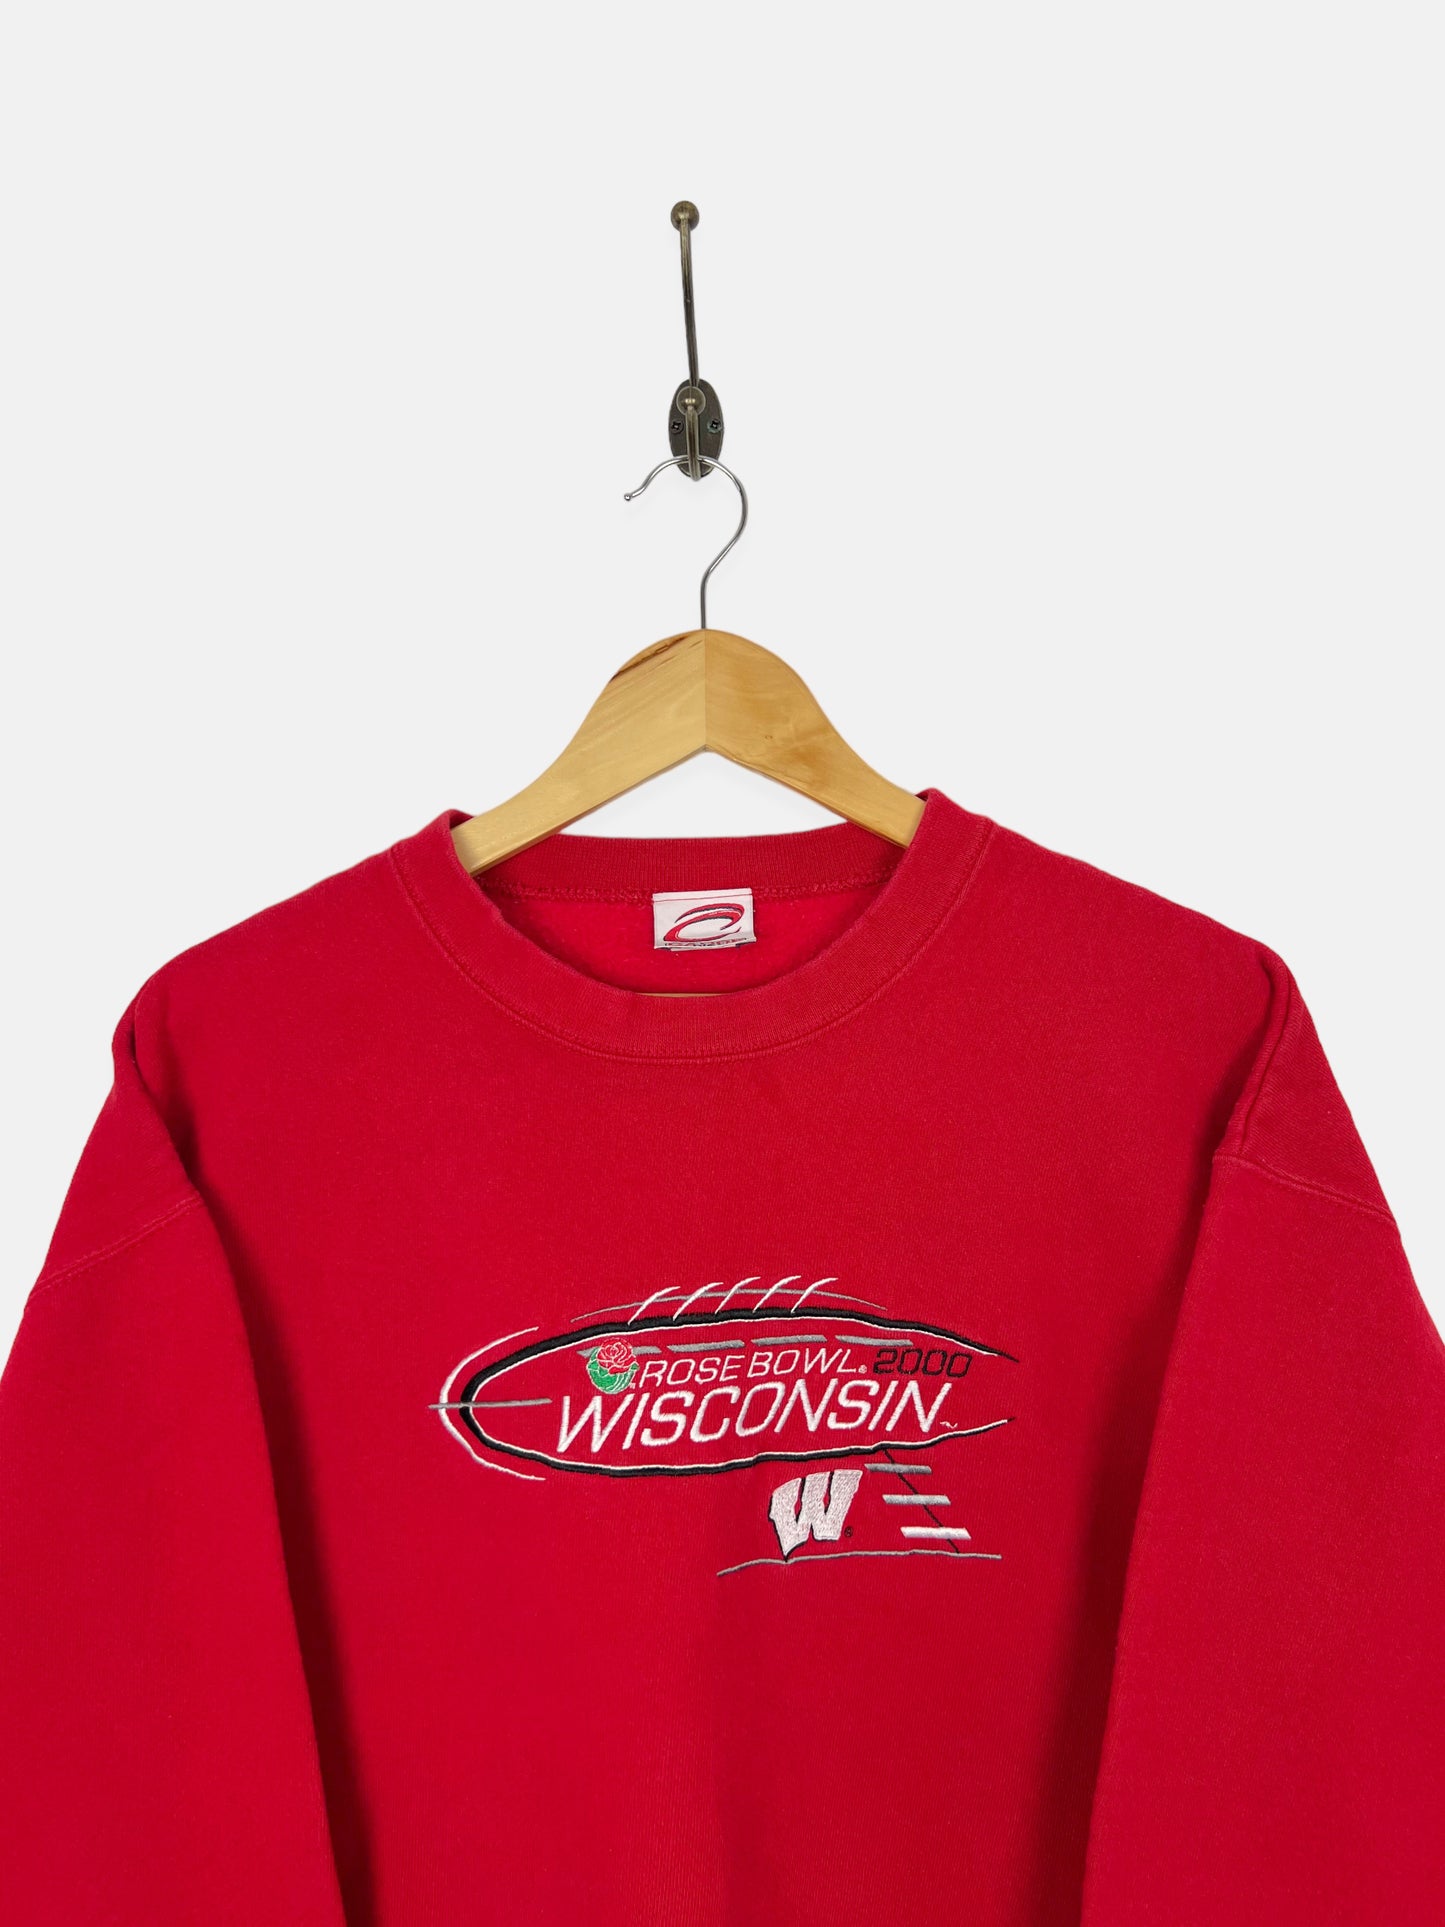 Wisconsin Badgers Embroidered Vintage Sweatshirt Size M